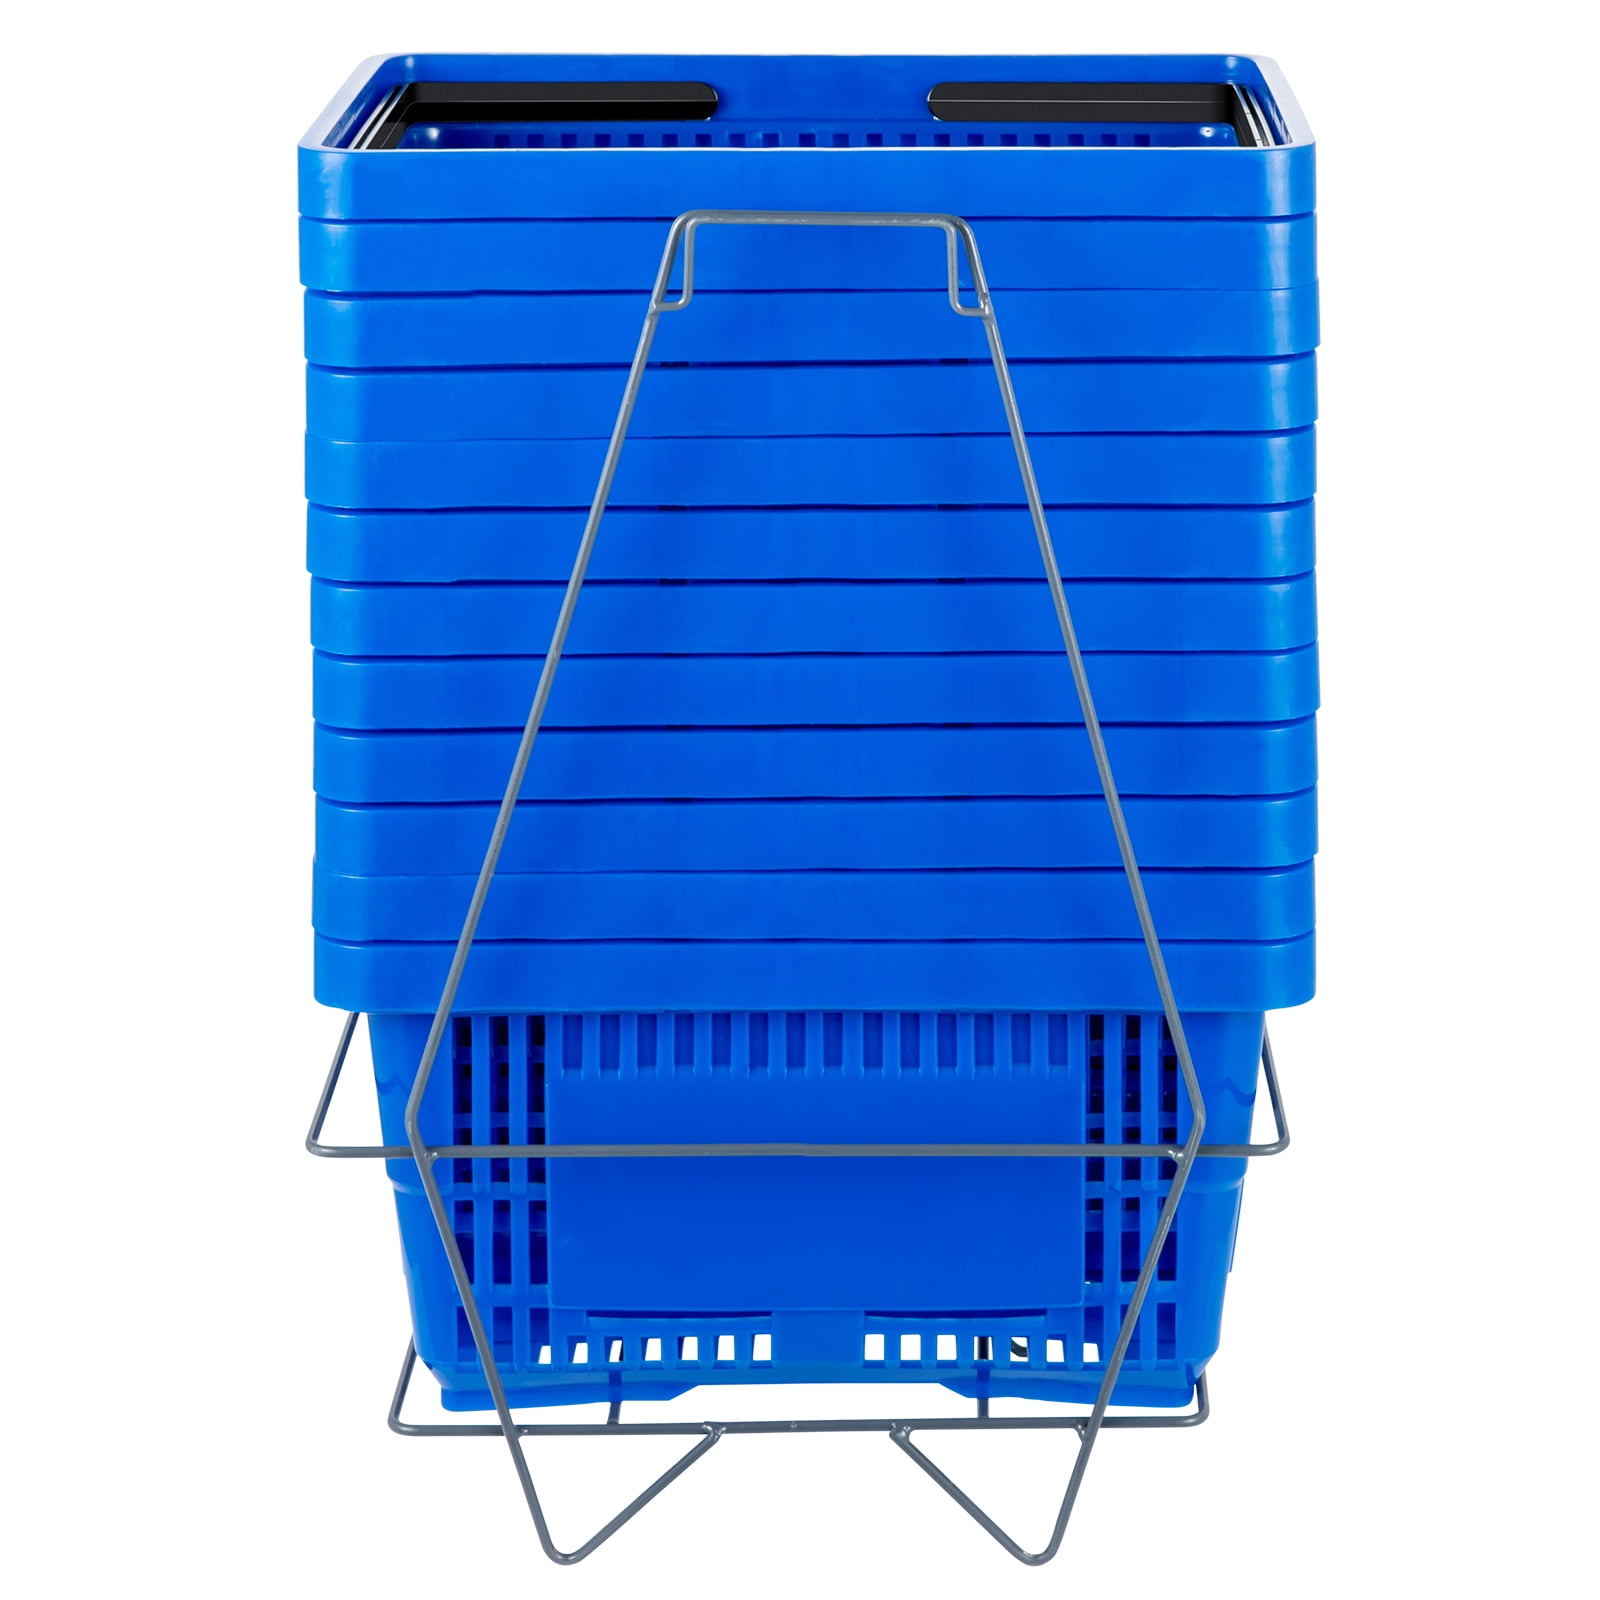 Hubert 32 Liter Blue Plastic Shopping Basket - 20L x 14W x 9 3/8D